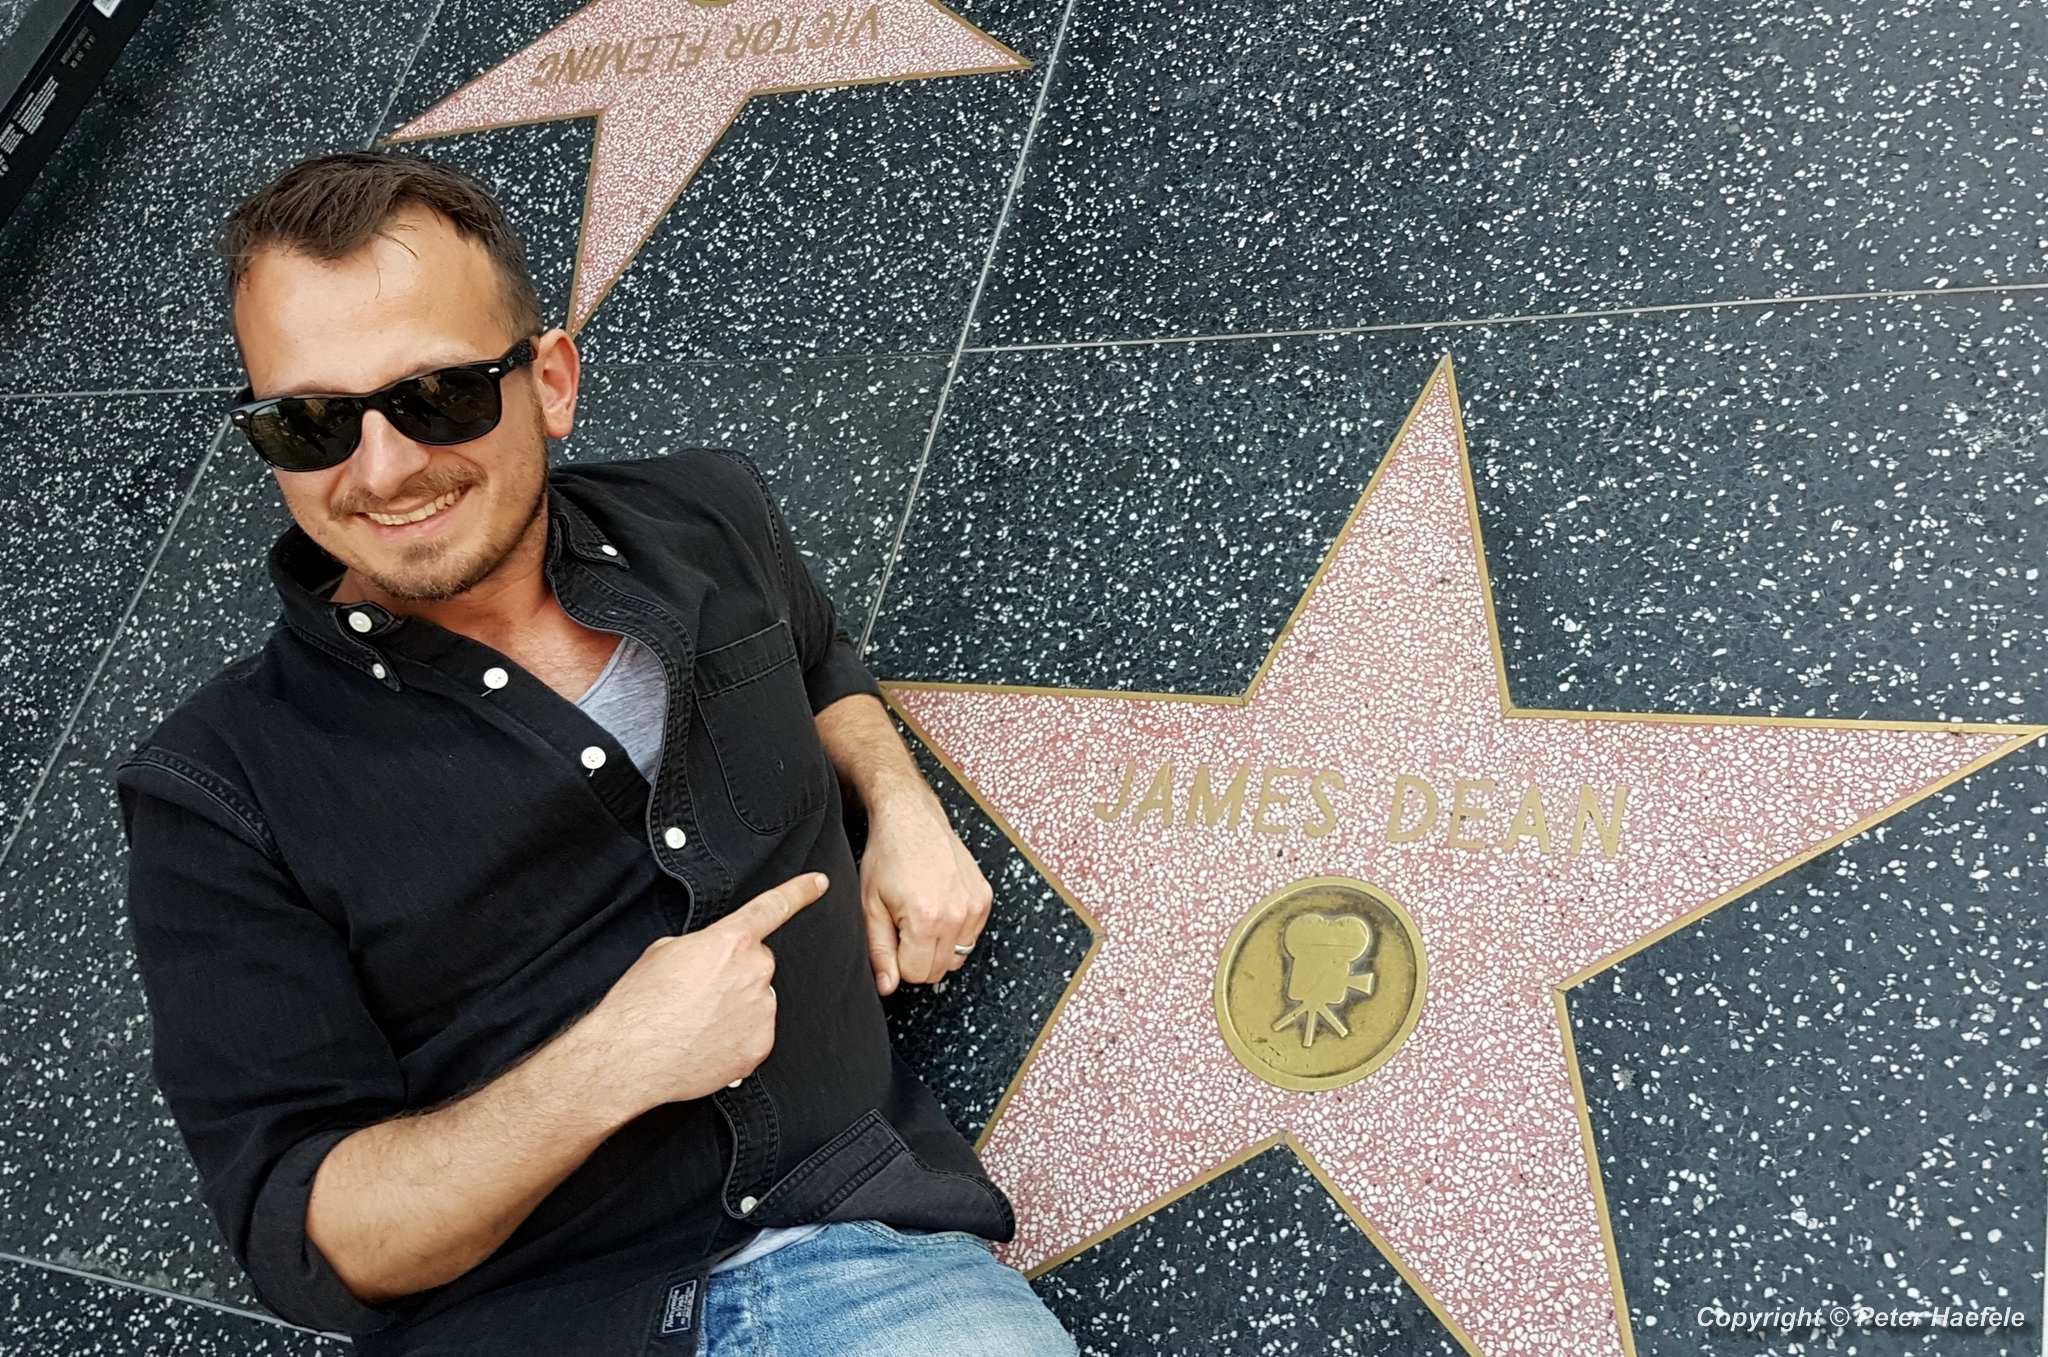 Roadtrip USA - James Dean's star on the Hollywood Walk of Fame, 1719 Vine Street, Los Angeles, California